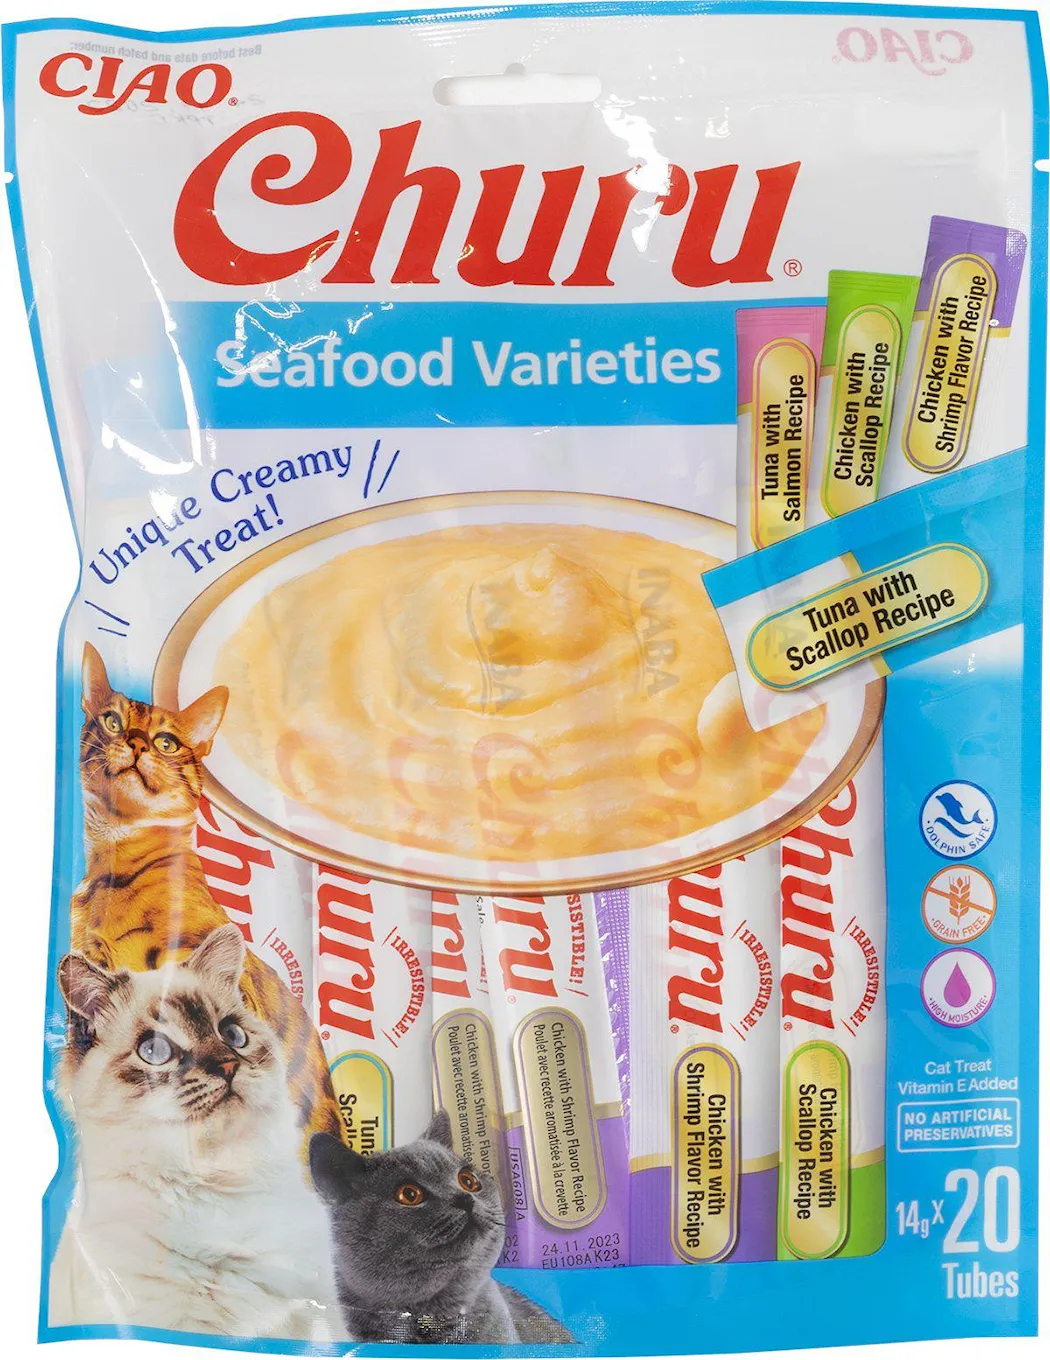 Churu Seafood Varieties 20-pack